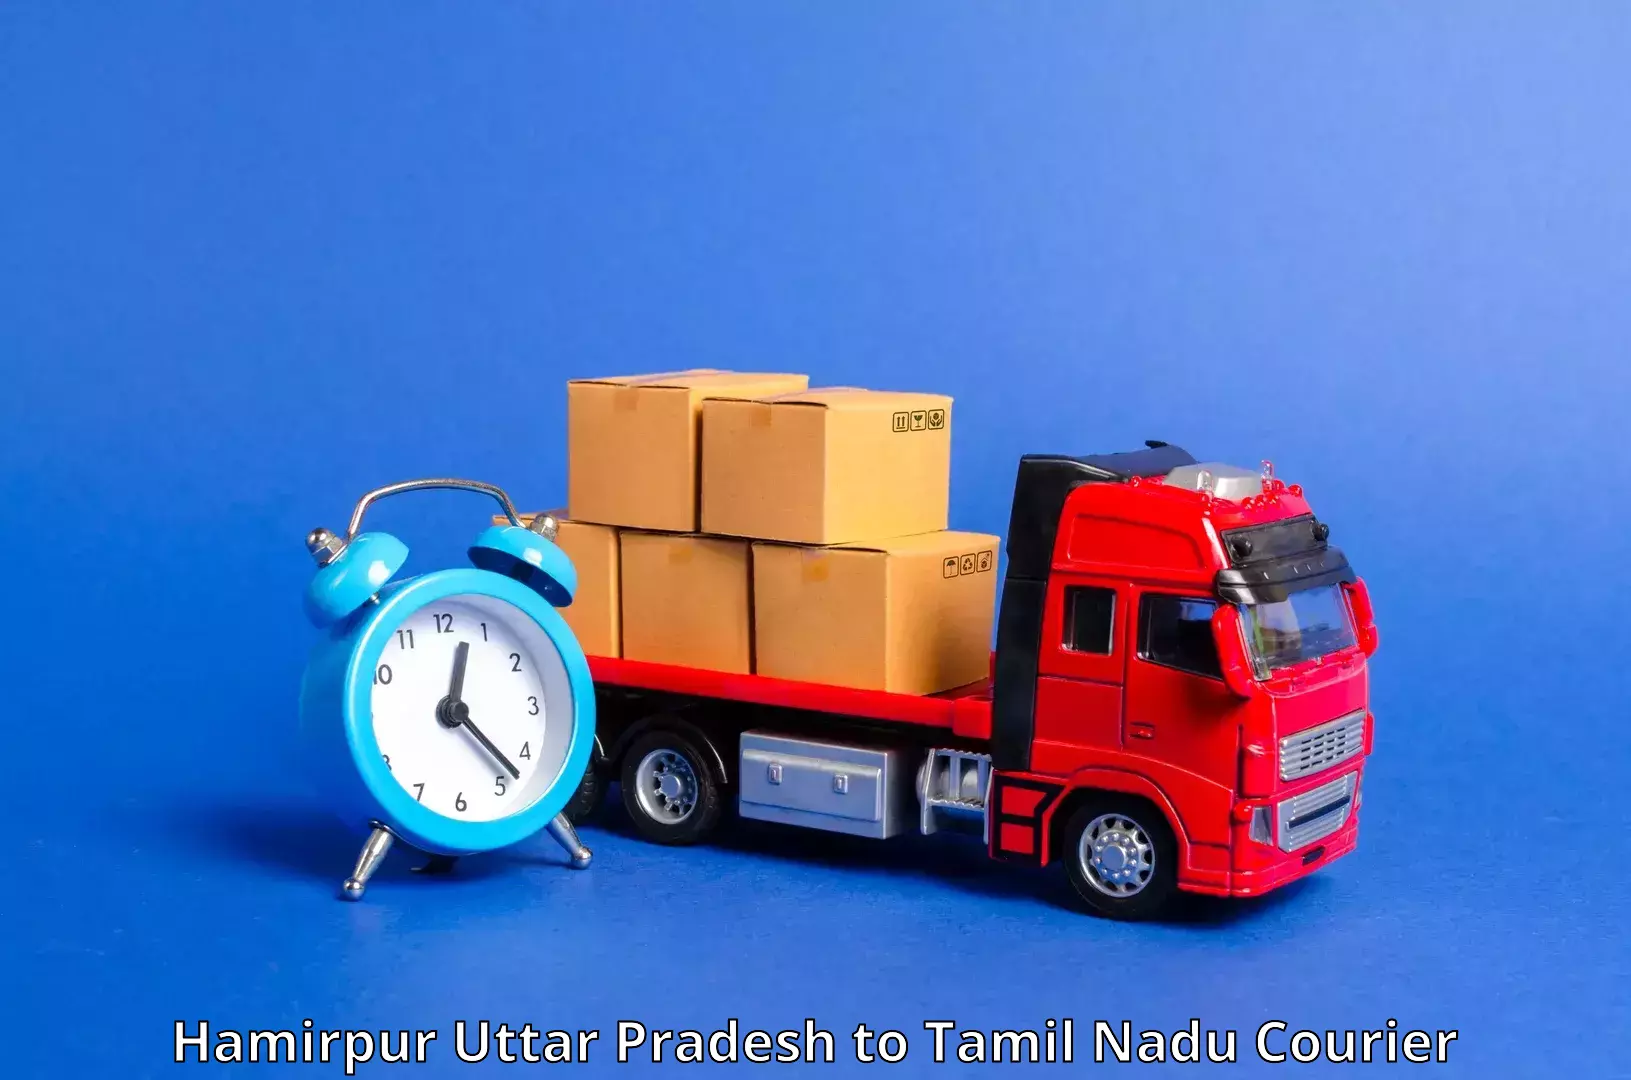 Reliable courier service Hamirpur Uttar Pradesh to Bhavani